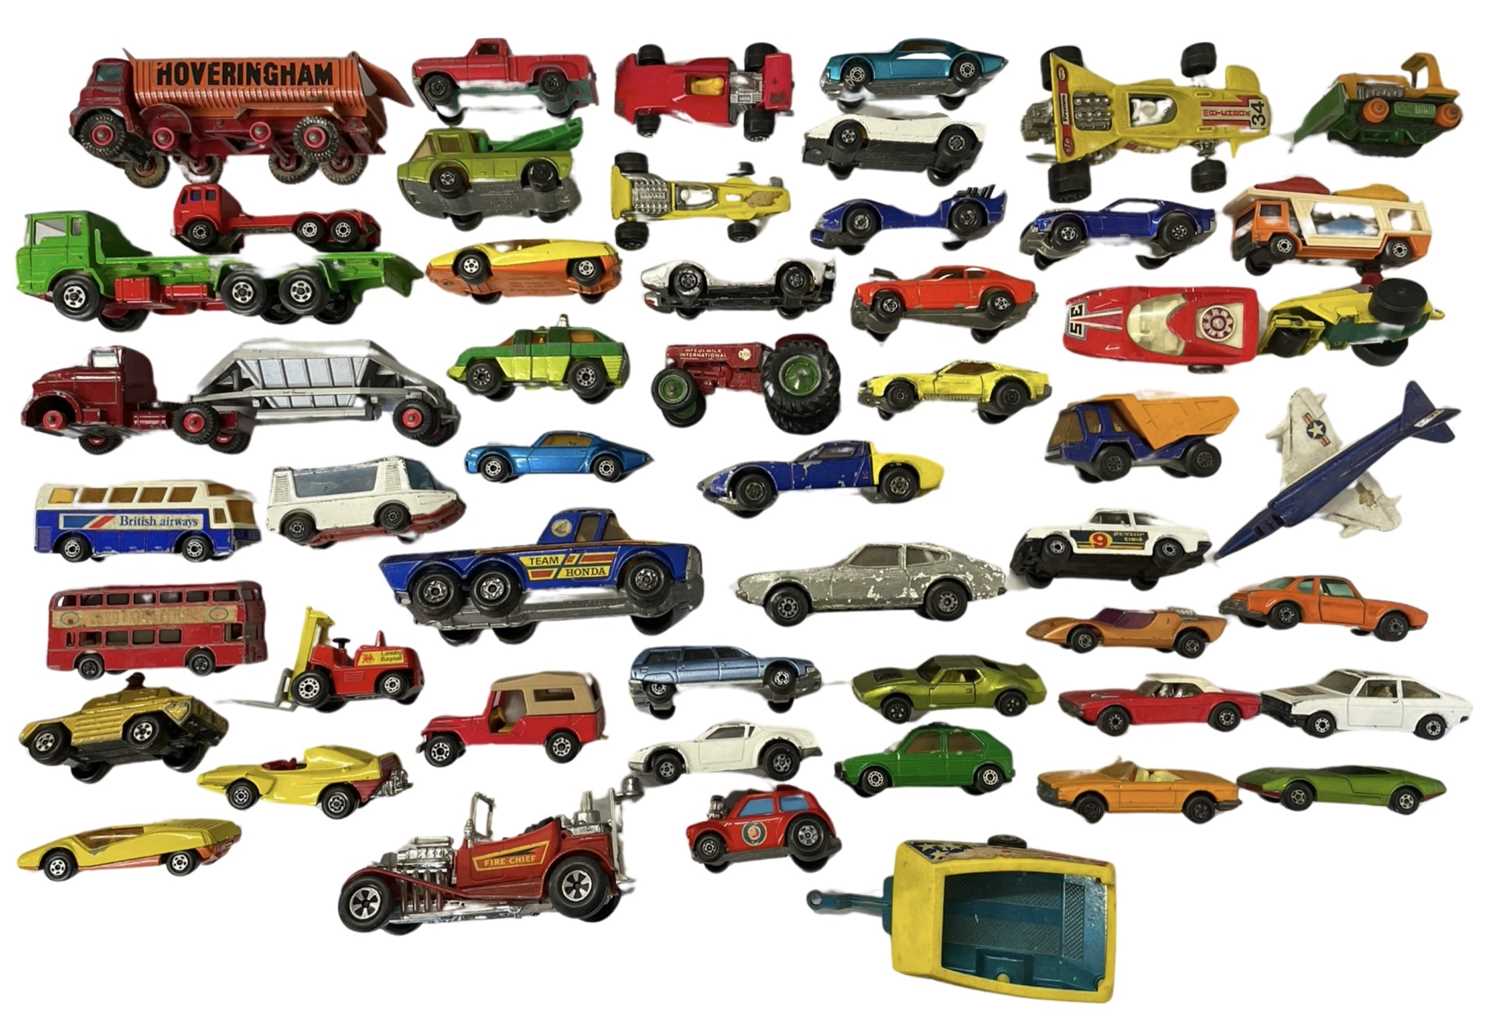 A mixed lot of playworn die-cast Matchbox vehicles